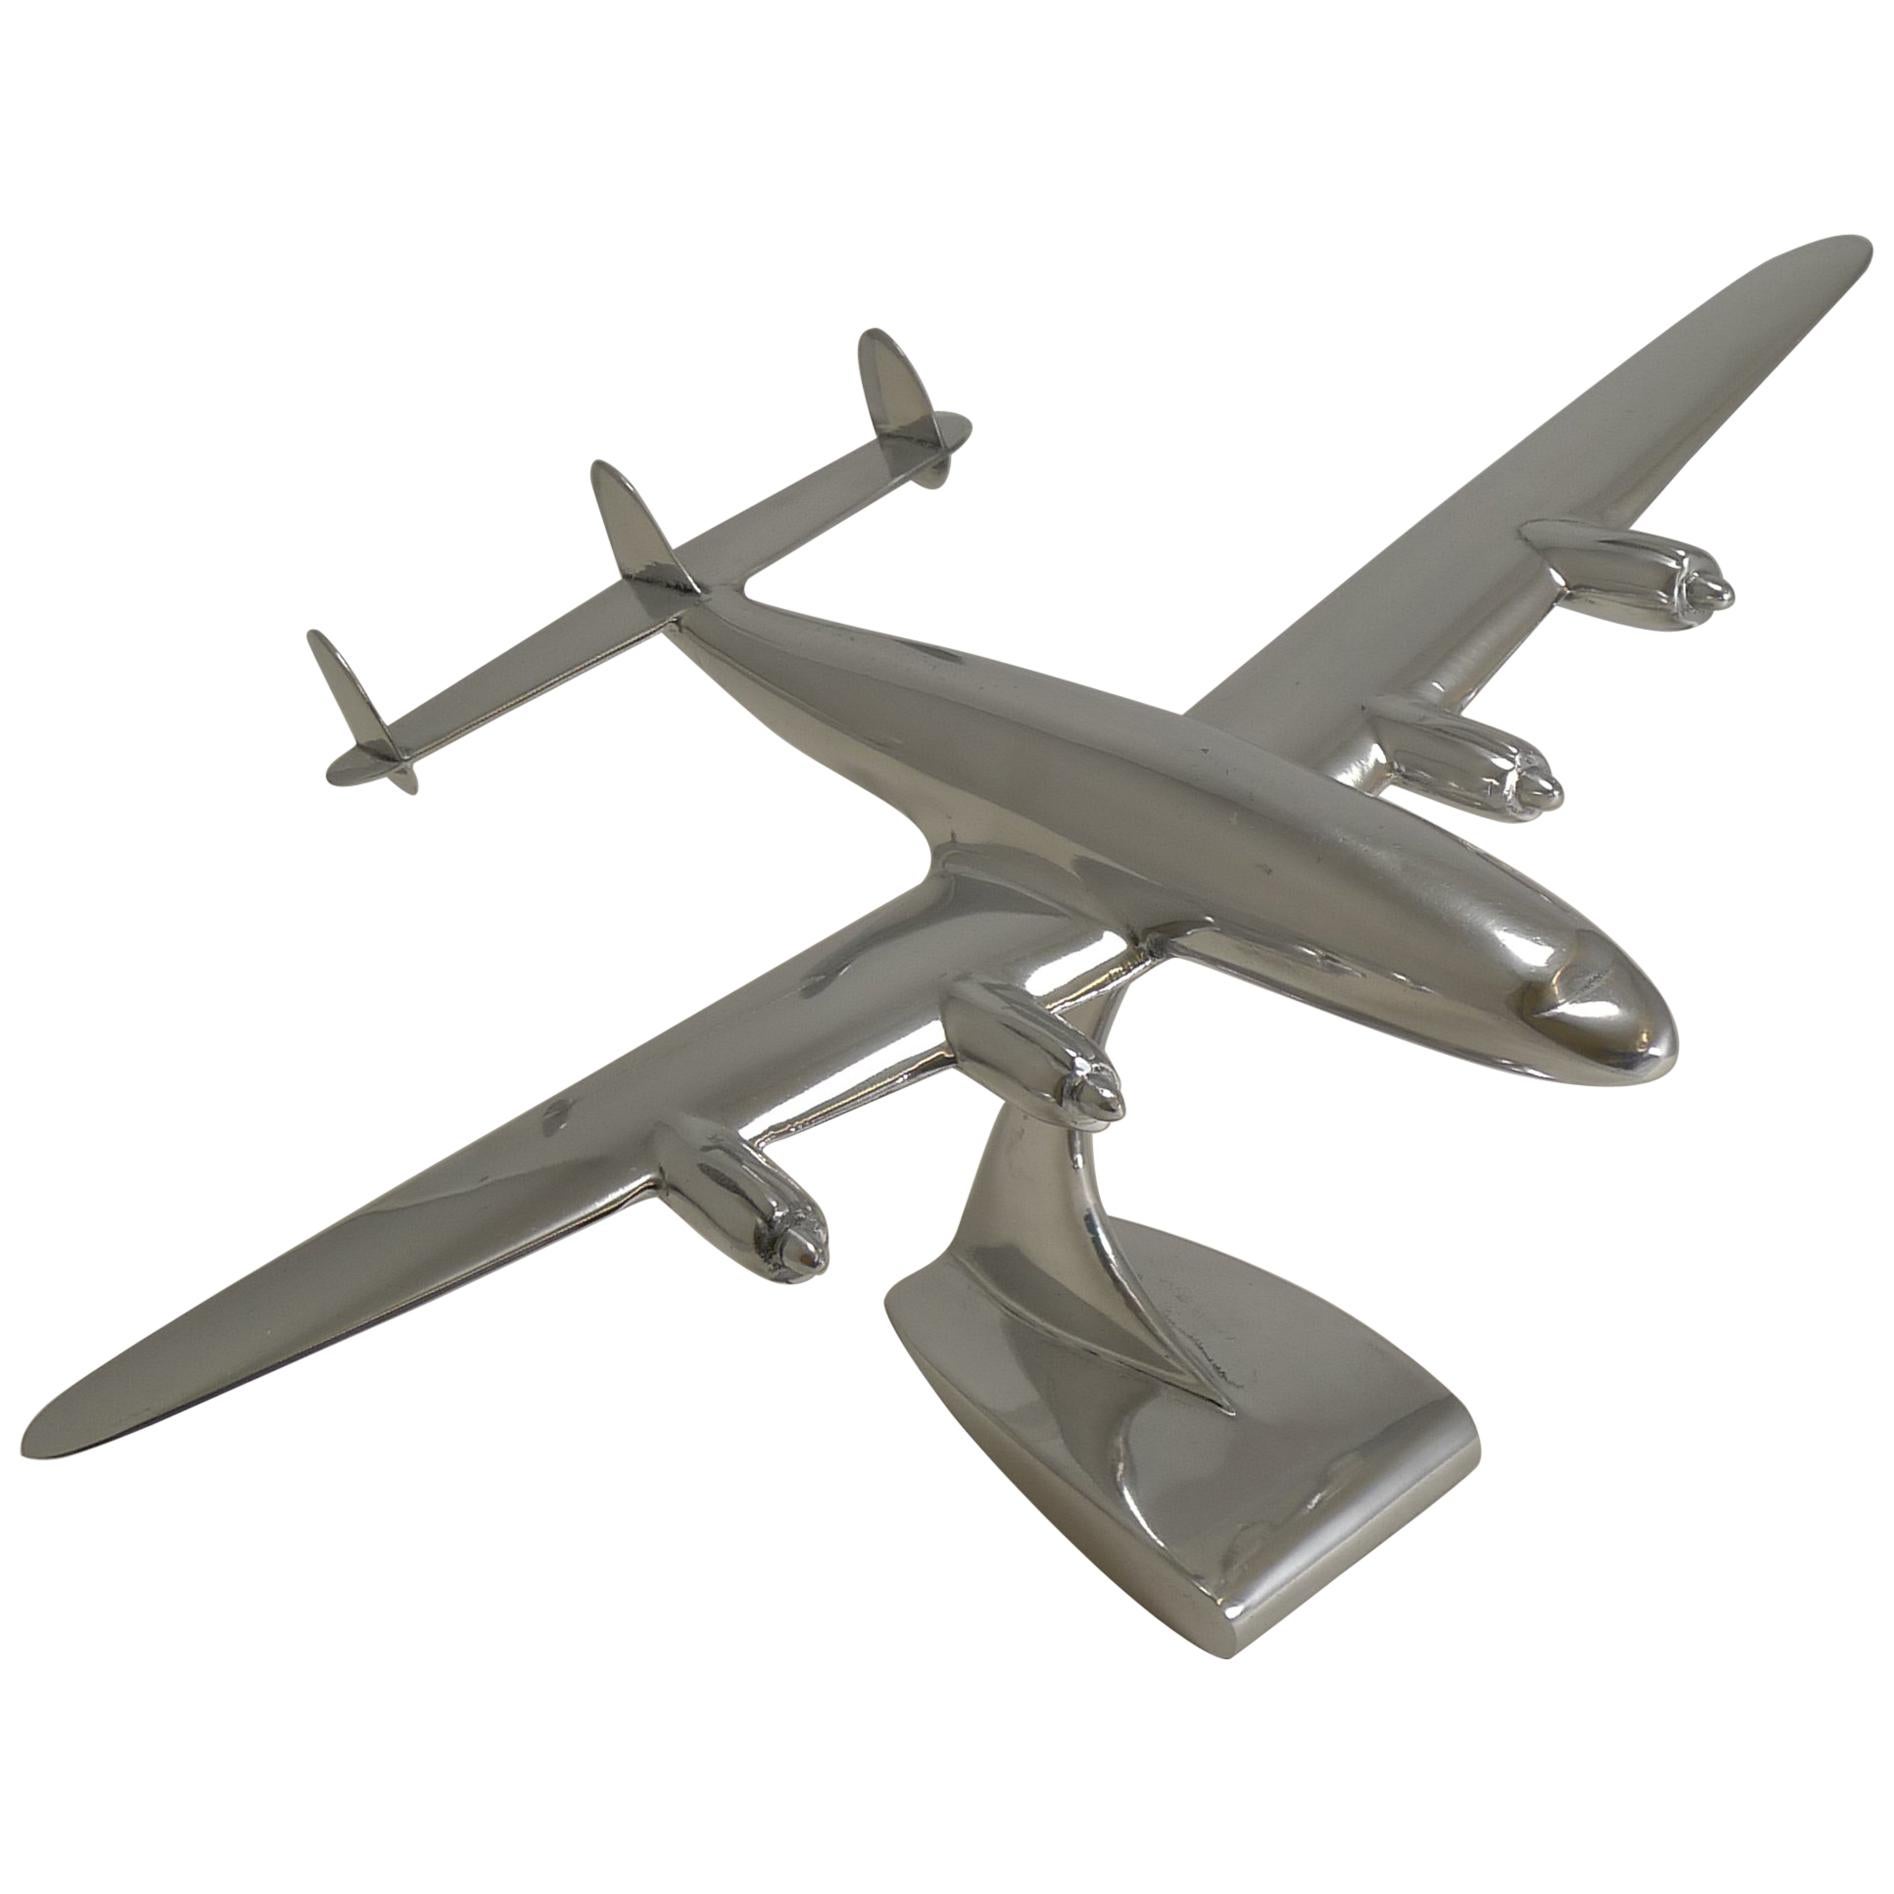 Vintage Lockheed Constellation Plane Model, circa 1950